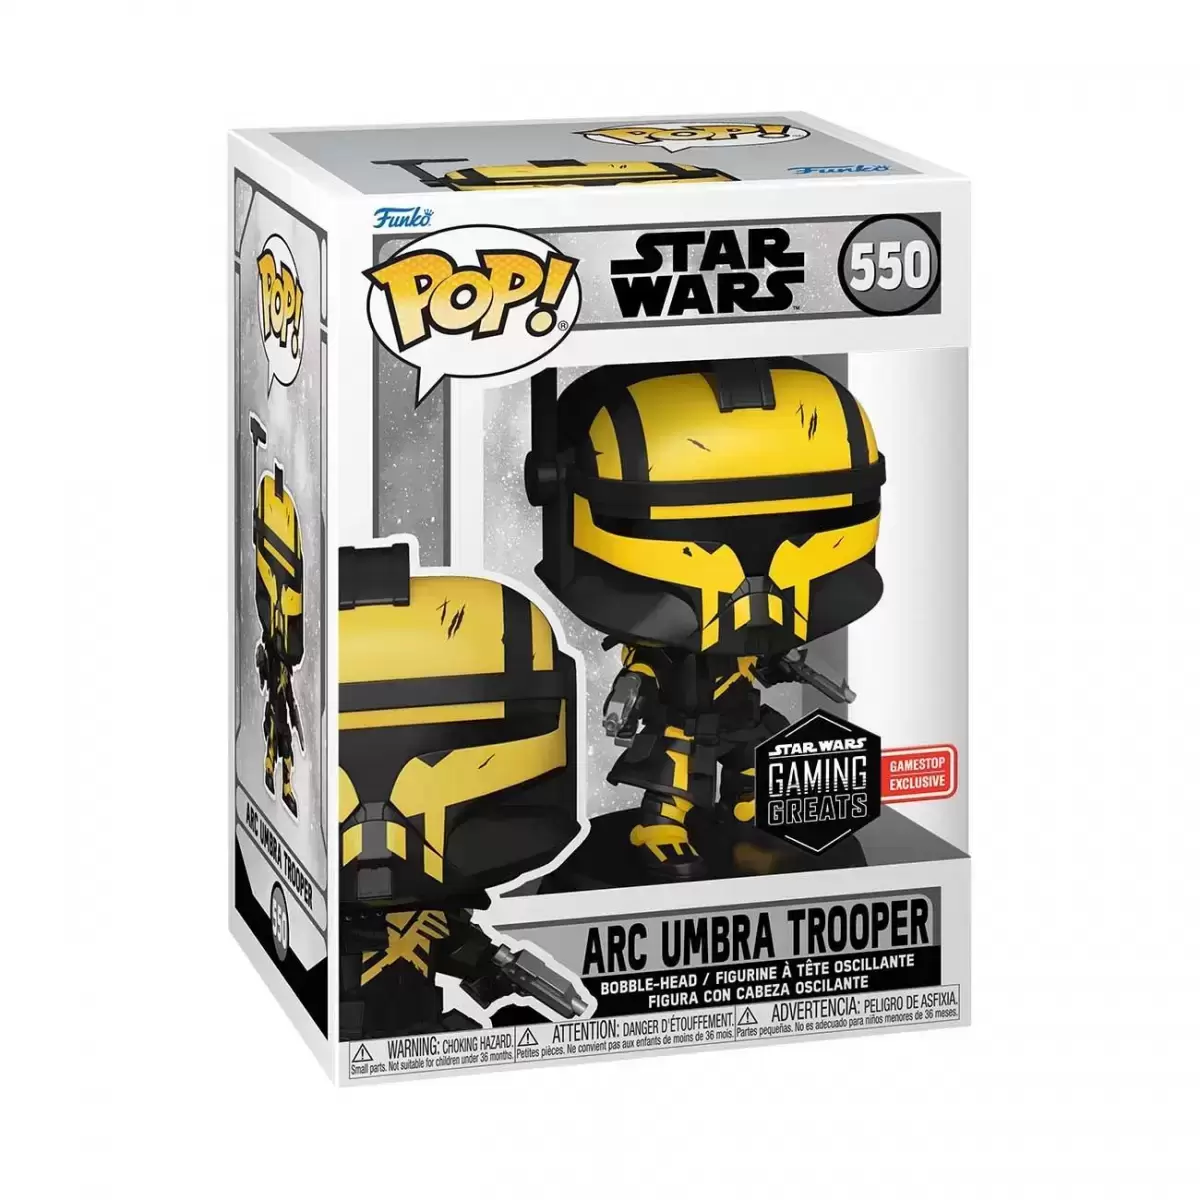 POP! Star Wars - Arc Umbra Trooper